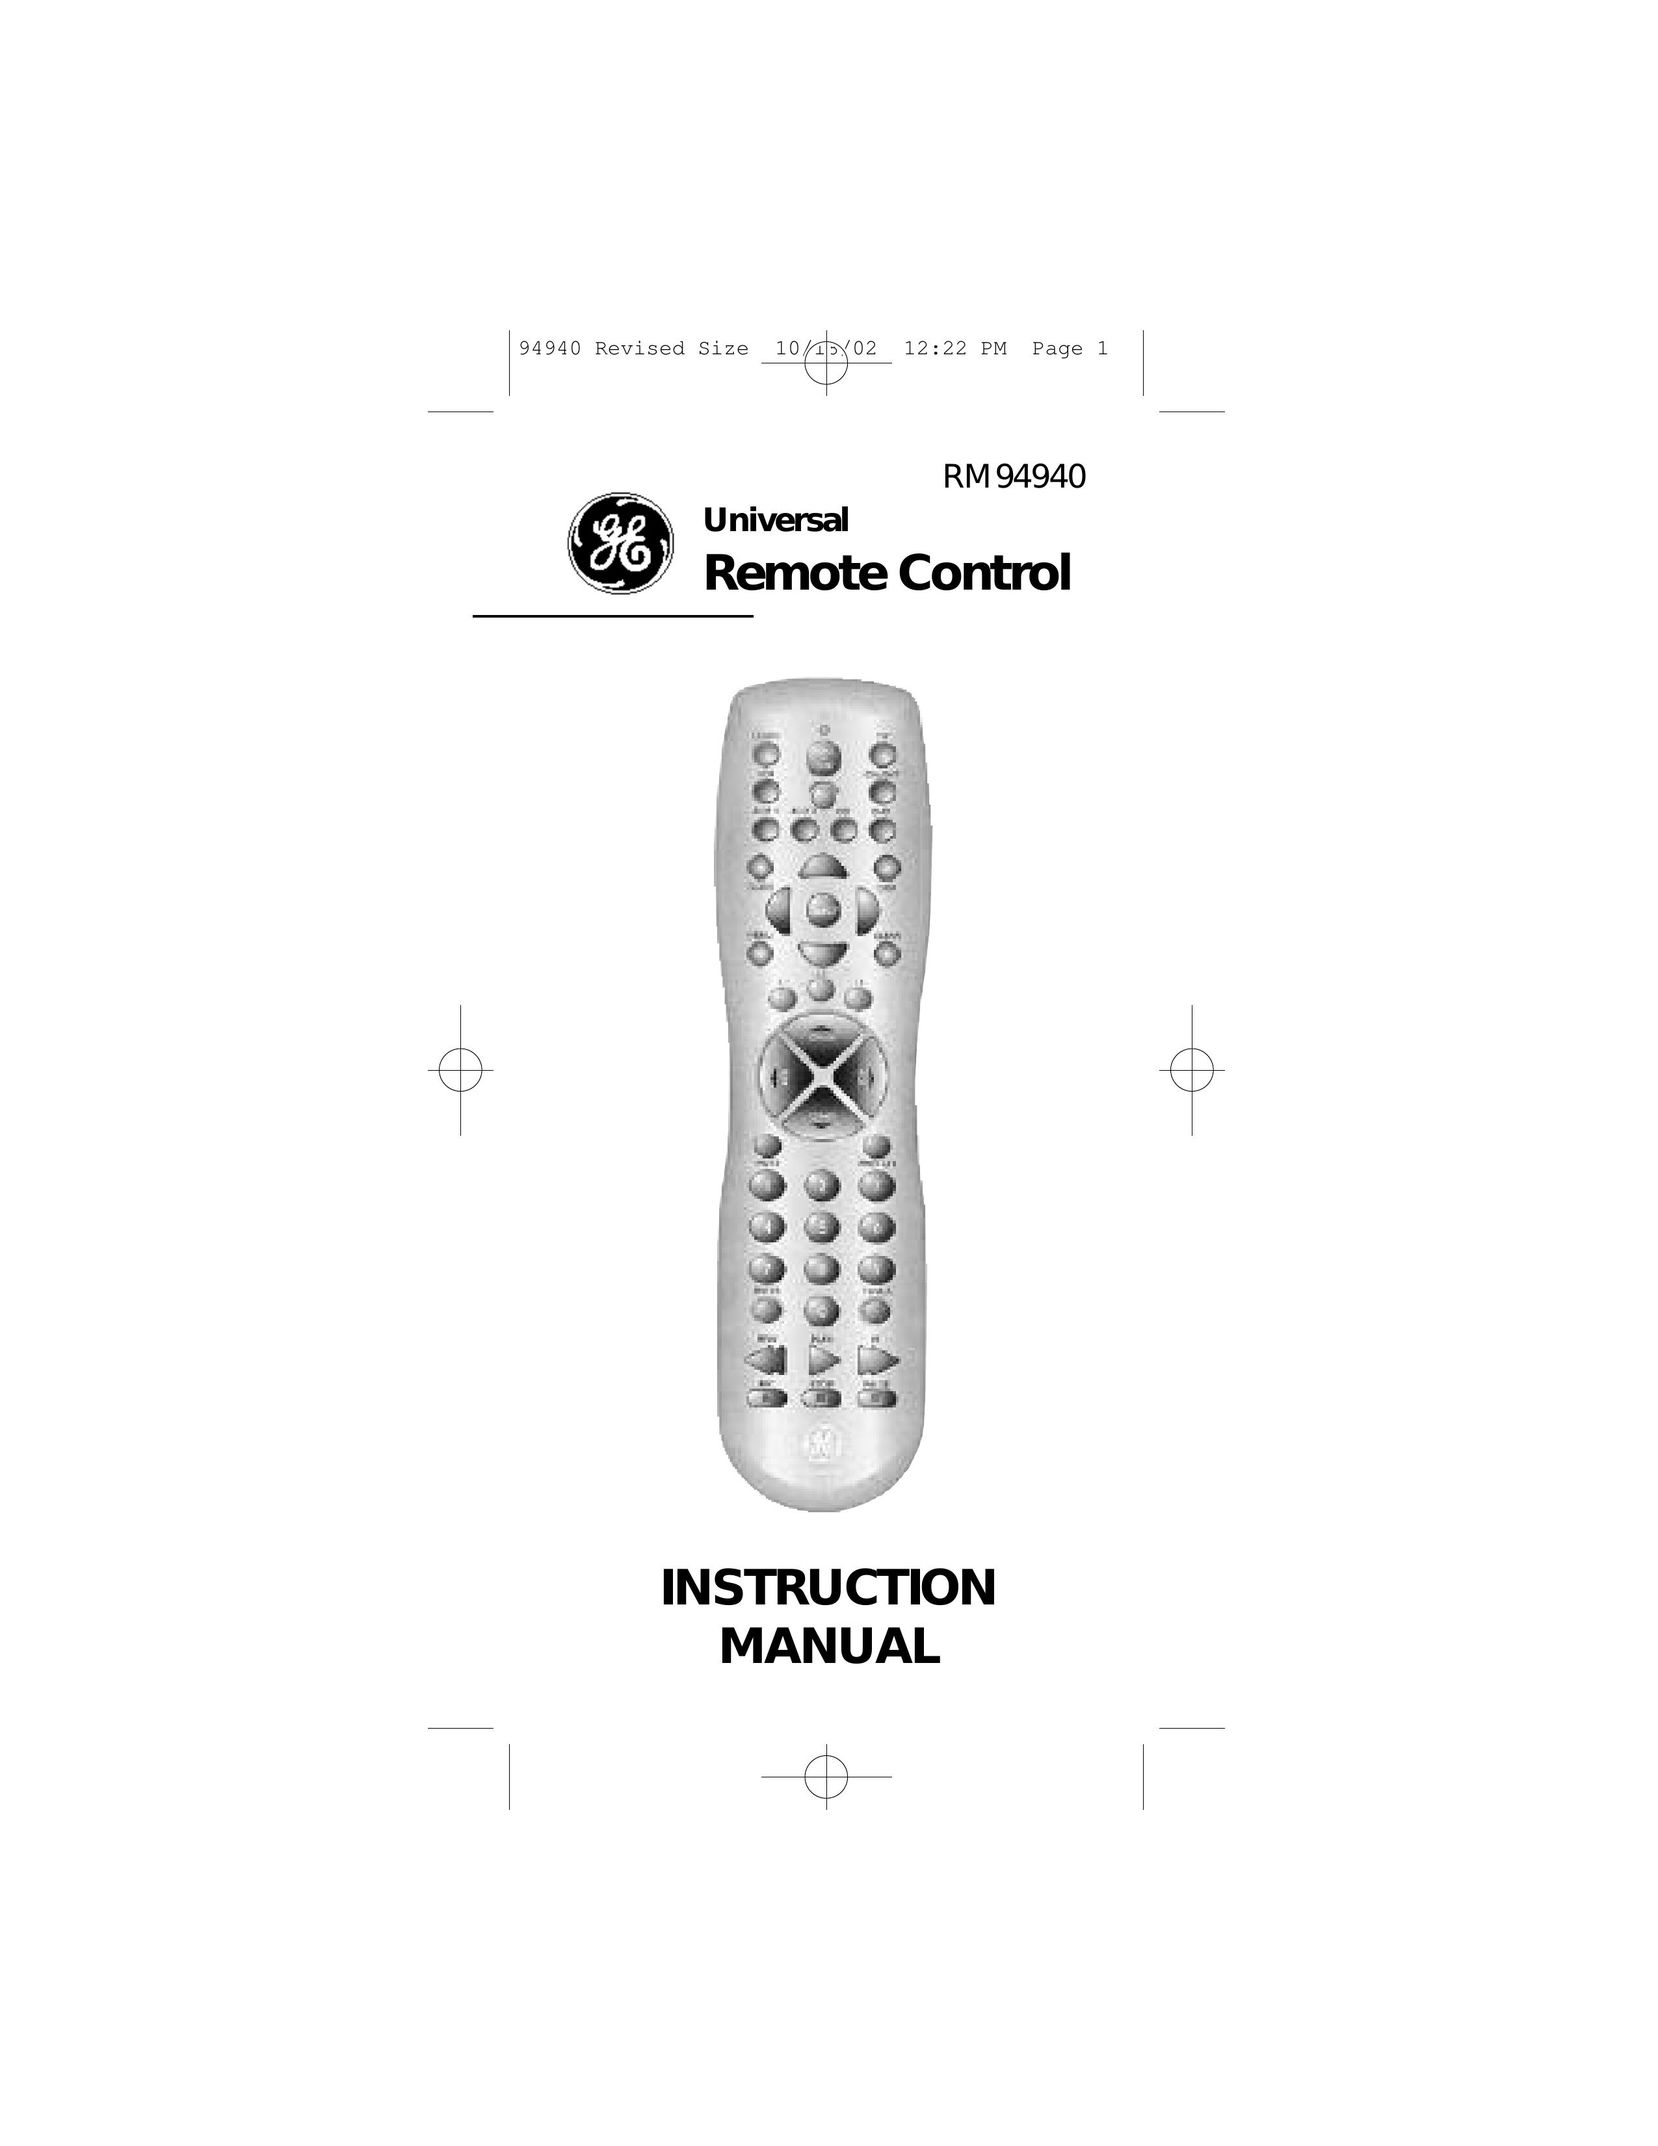 GE RM94940 Universal Remote User Manual